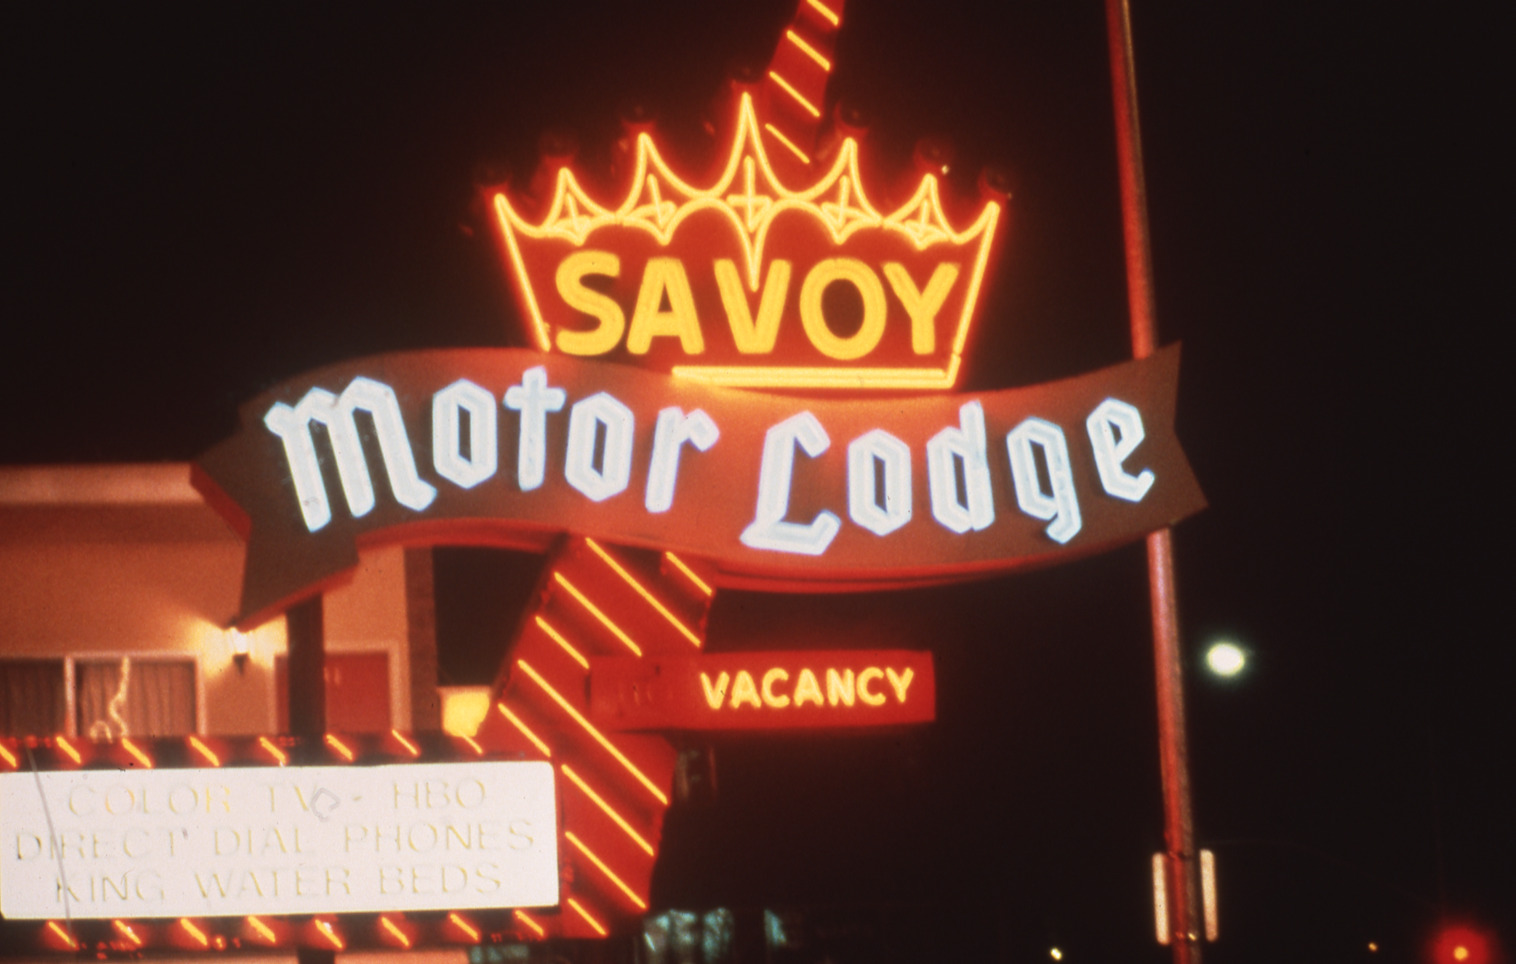 Savoy Motor Lodge mounted sign, Reno, Nevada: photographic print